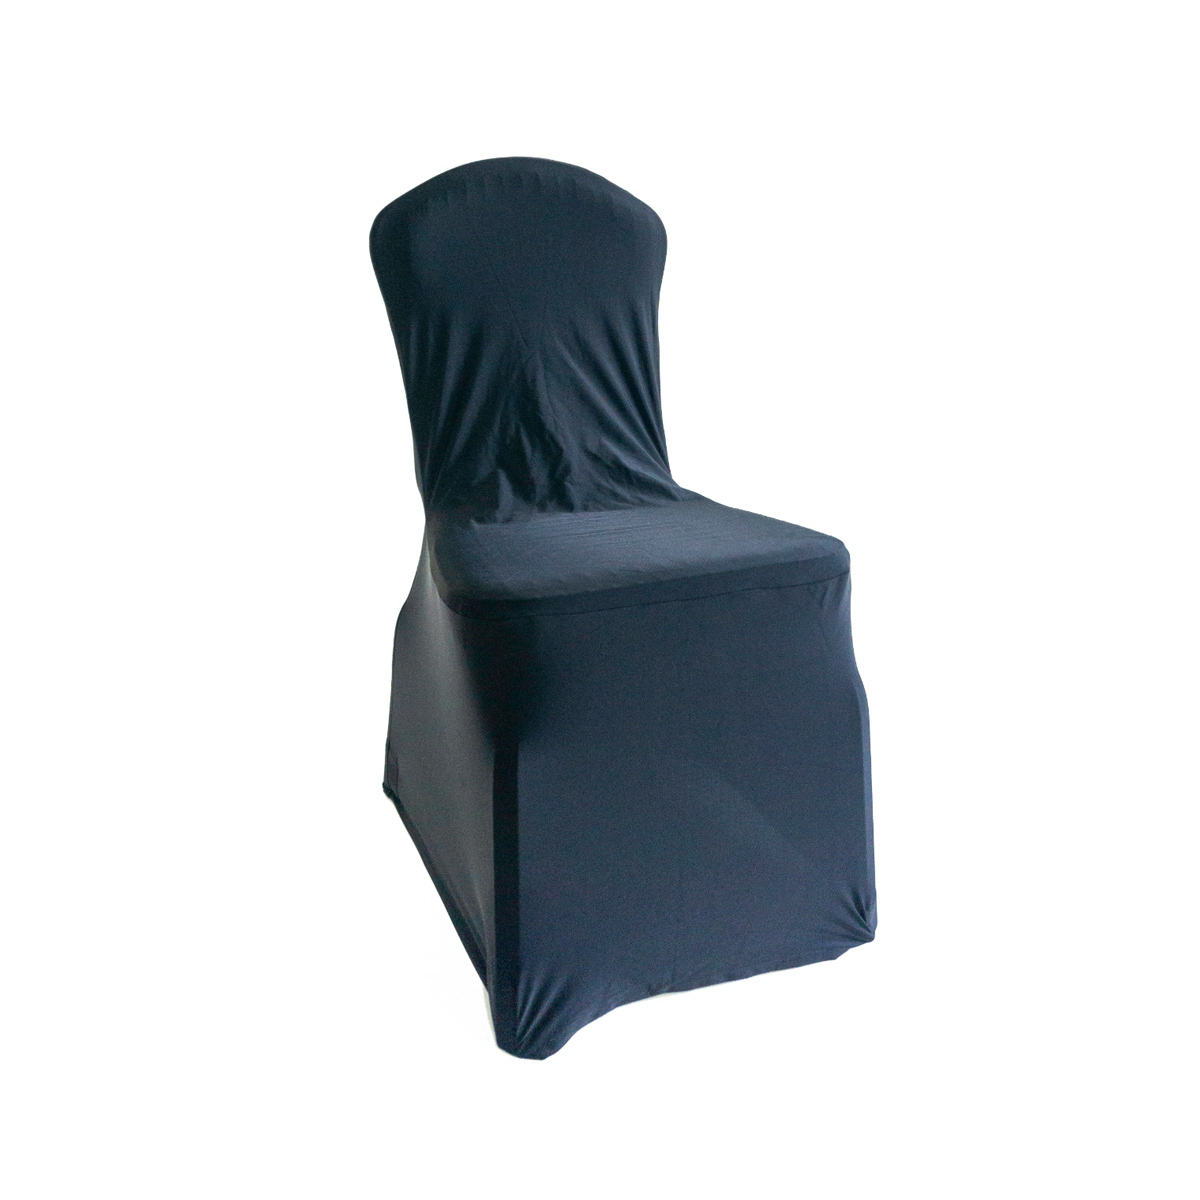  Black Spandex Chair Cover 